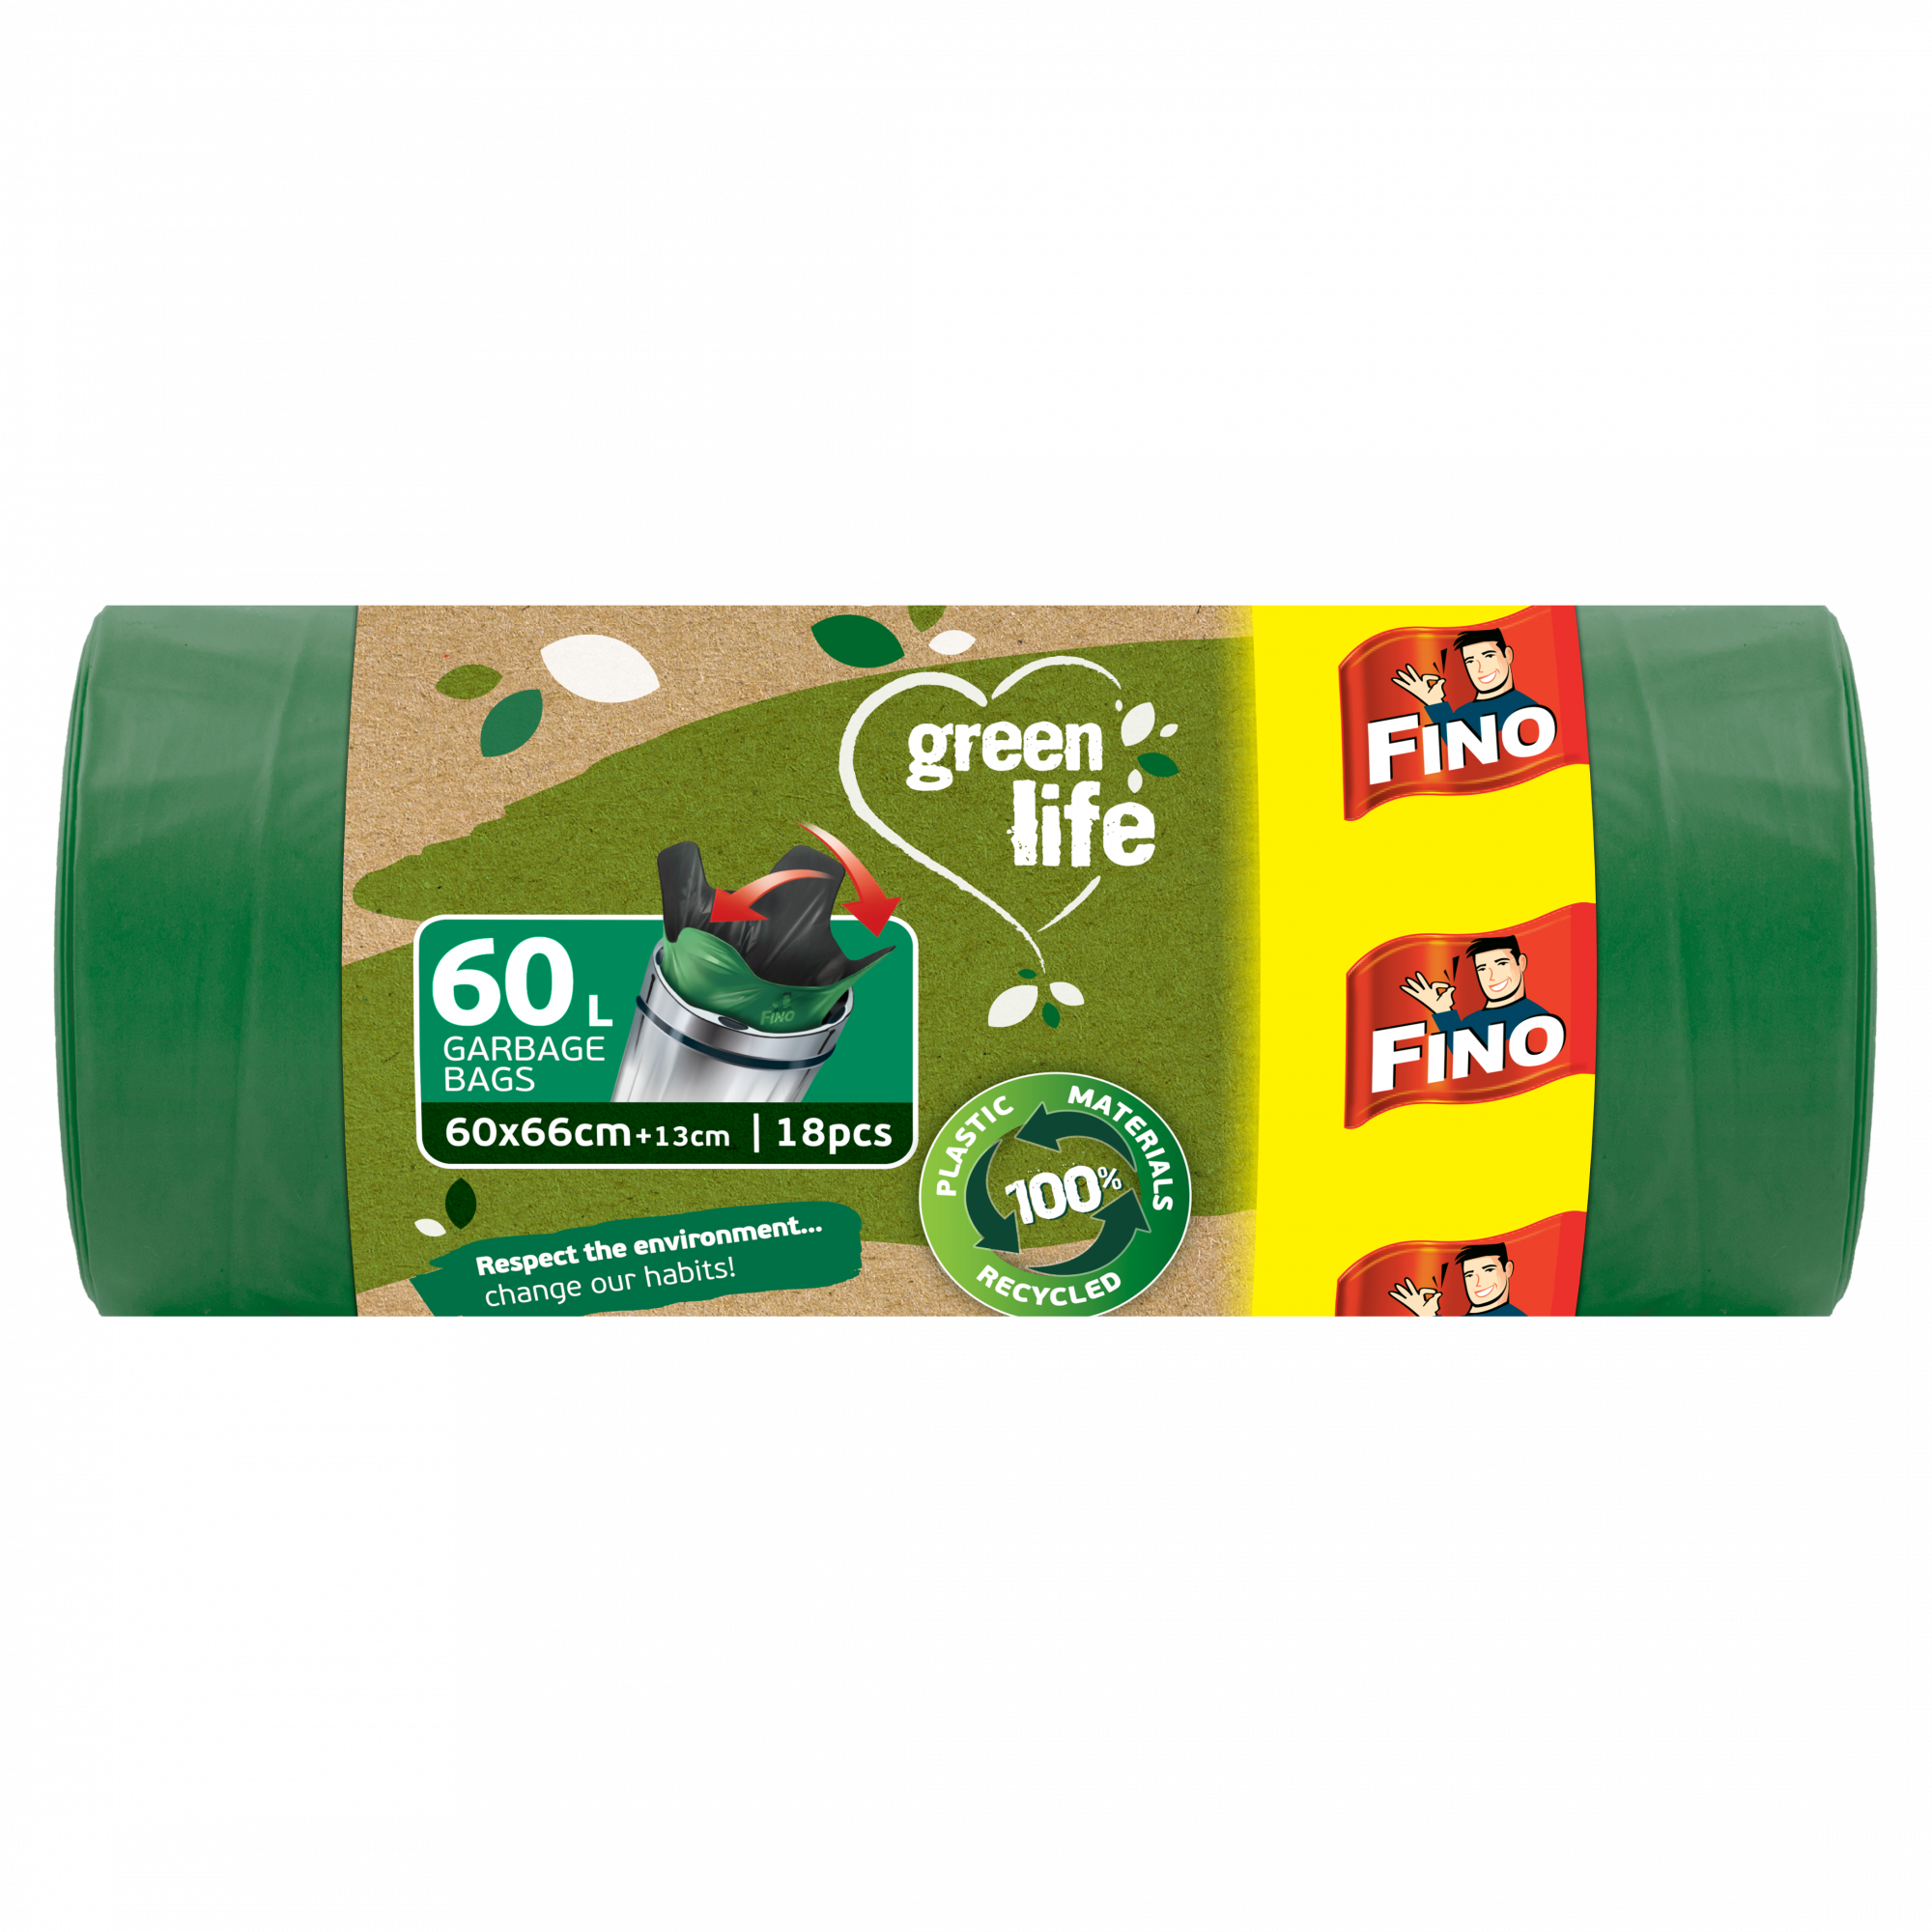 FINO Pytle na odpadky Green Life Easy pack 27 μm - 60 l (18 ks) FINO